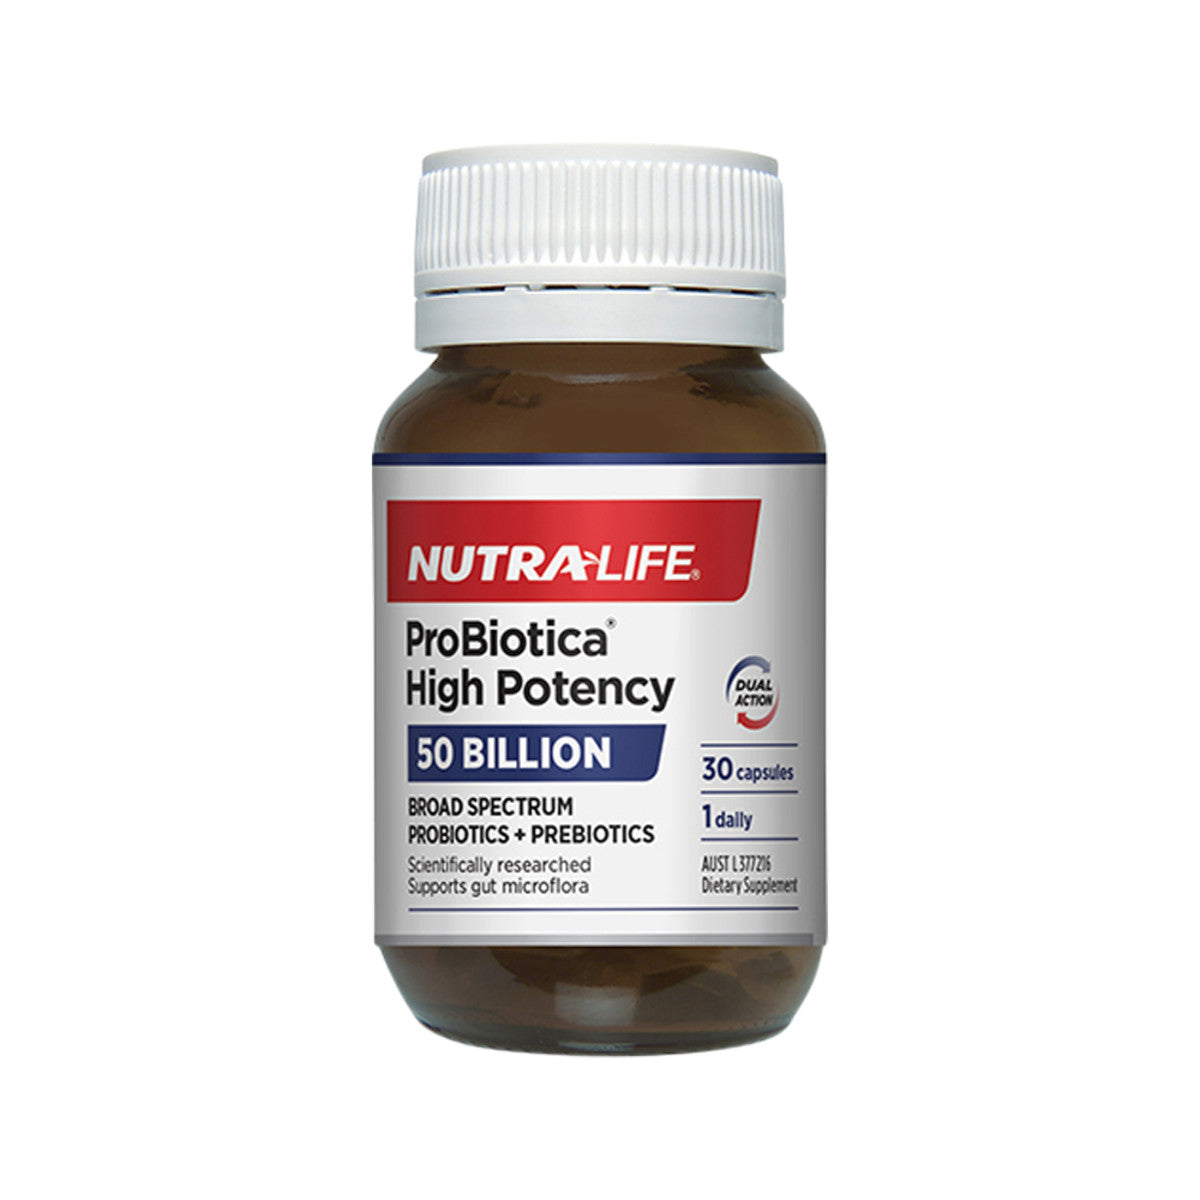 NutraLife - ProBiotica High Potency (50 Billion)